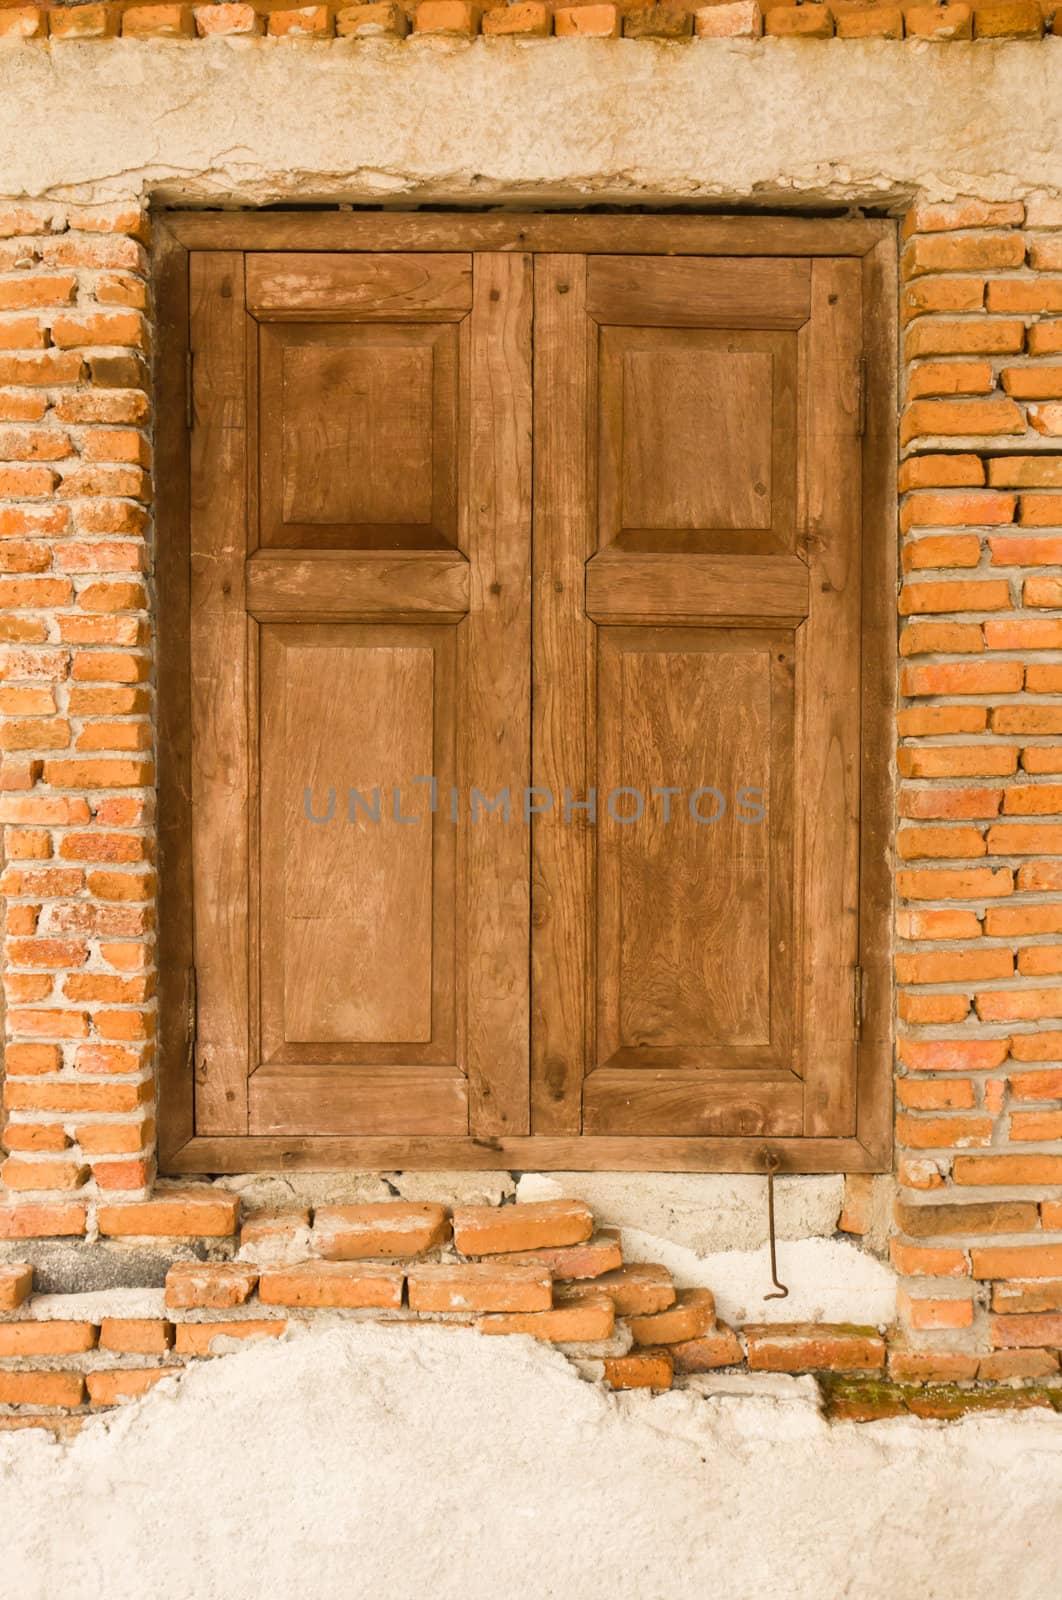 Grunge window background with brick wall